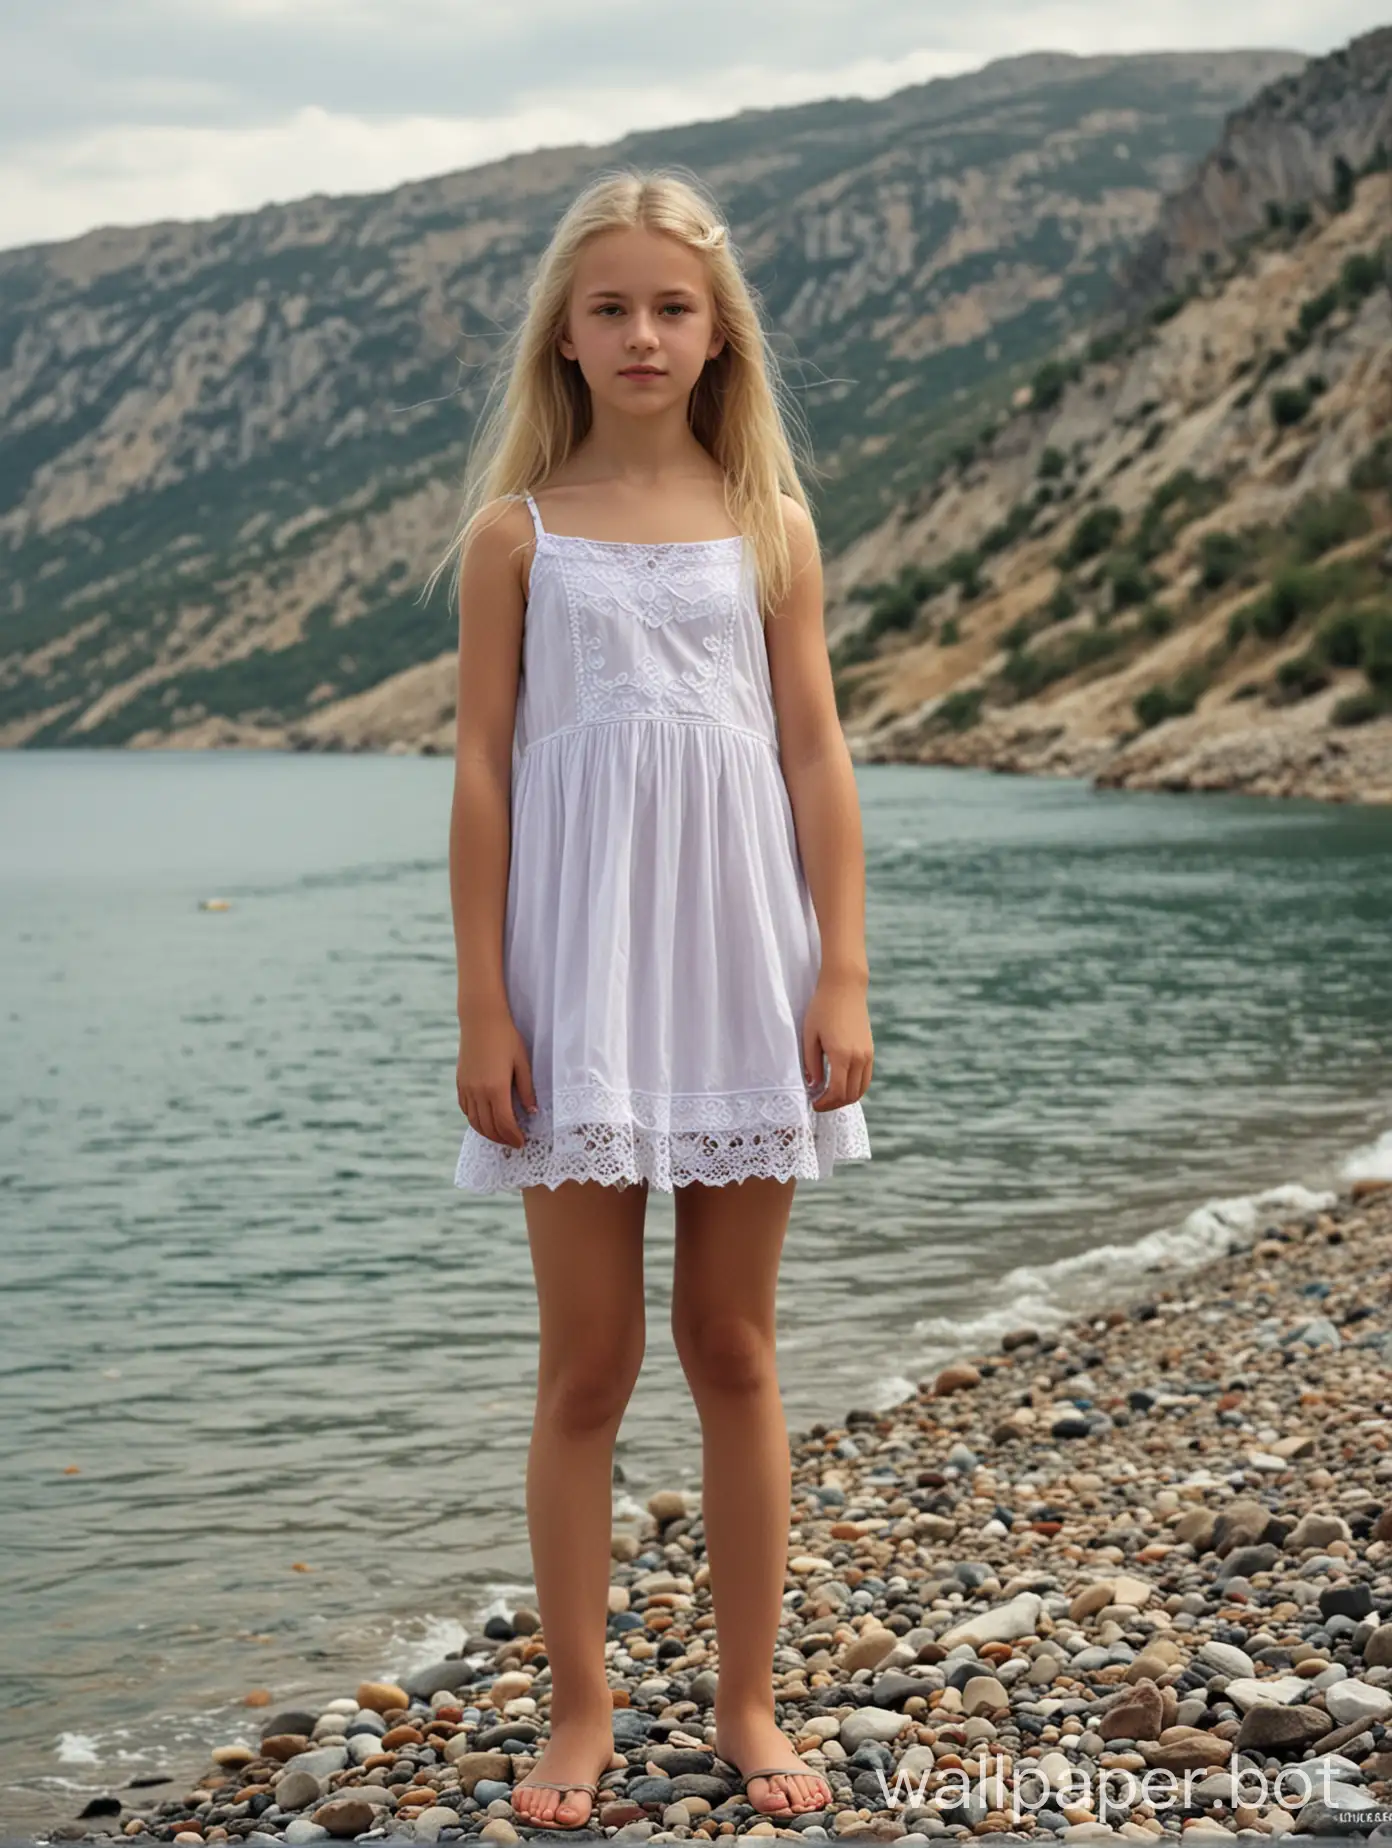 Russian beauty 12 years old, long blonde hair, very short dress, full length, Crimea, mountains, sea